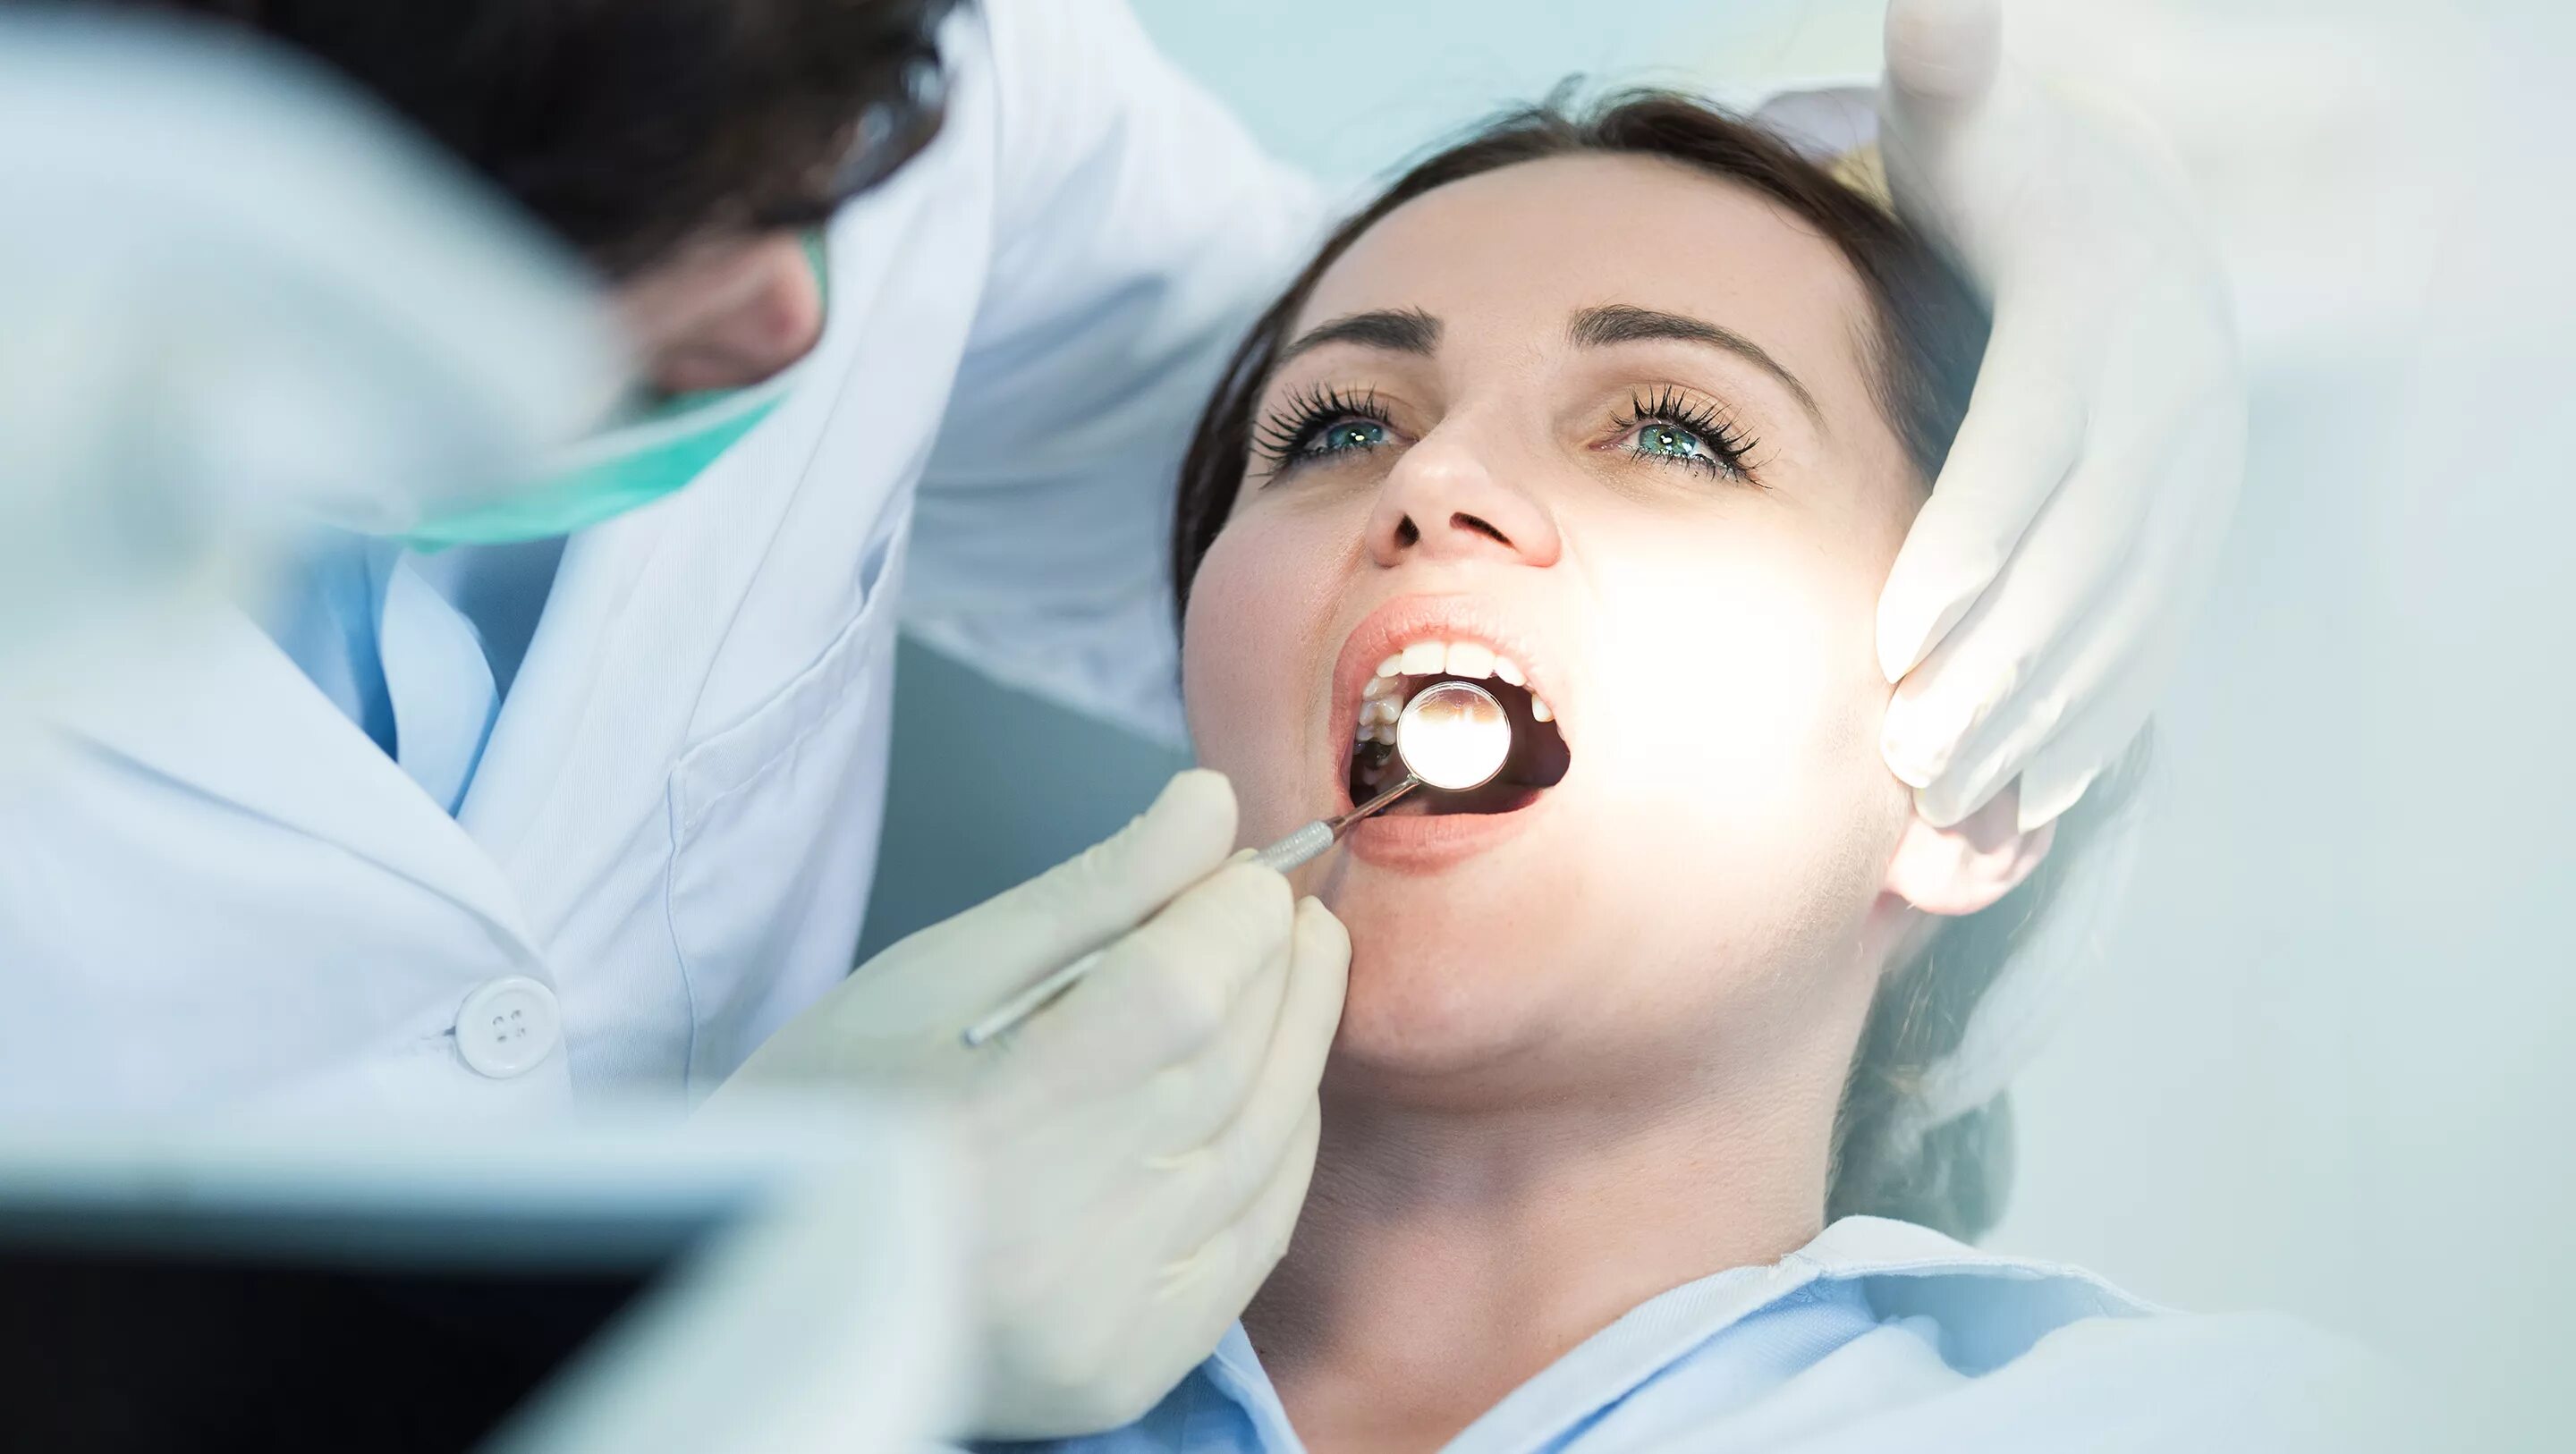 Осмотр стоматолога. Стоматолог и пациент. Обследование у стоматолога. Осмотр в стоматологии.